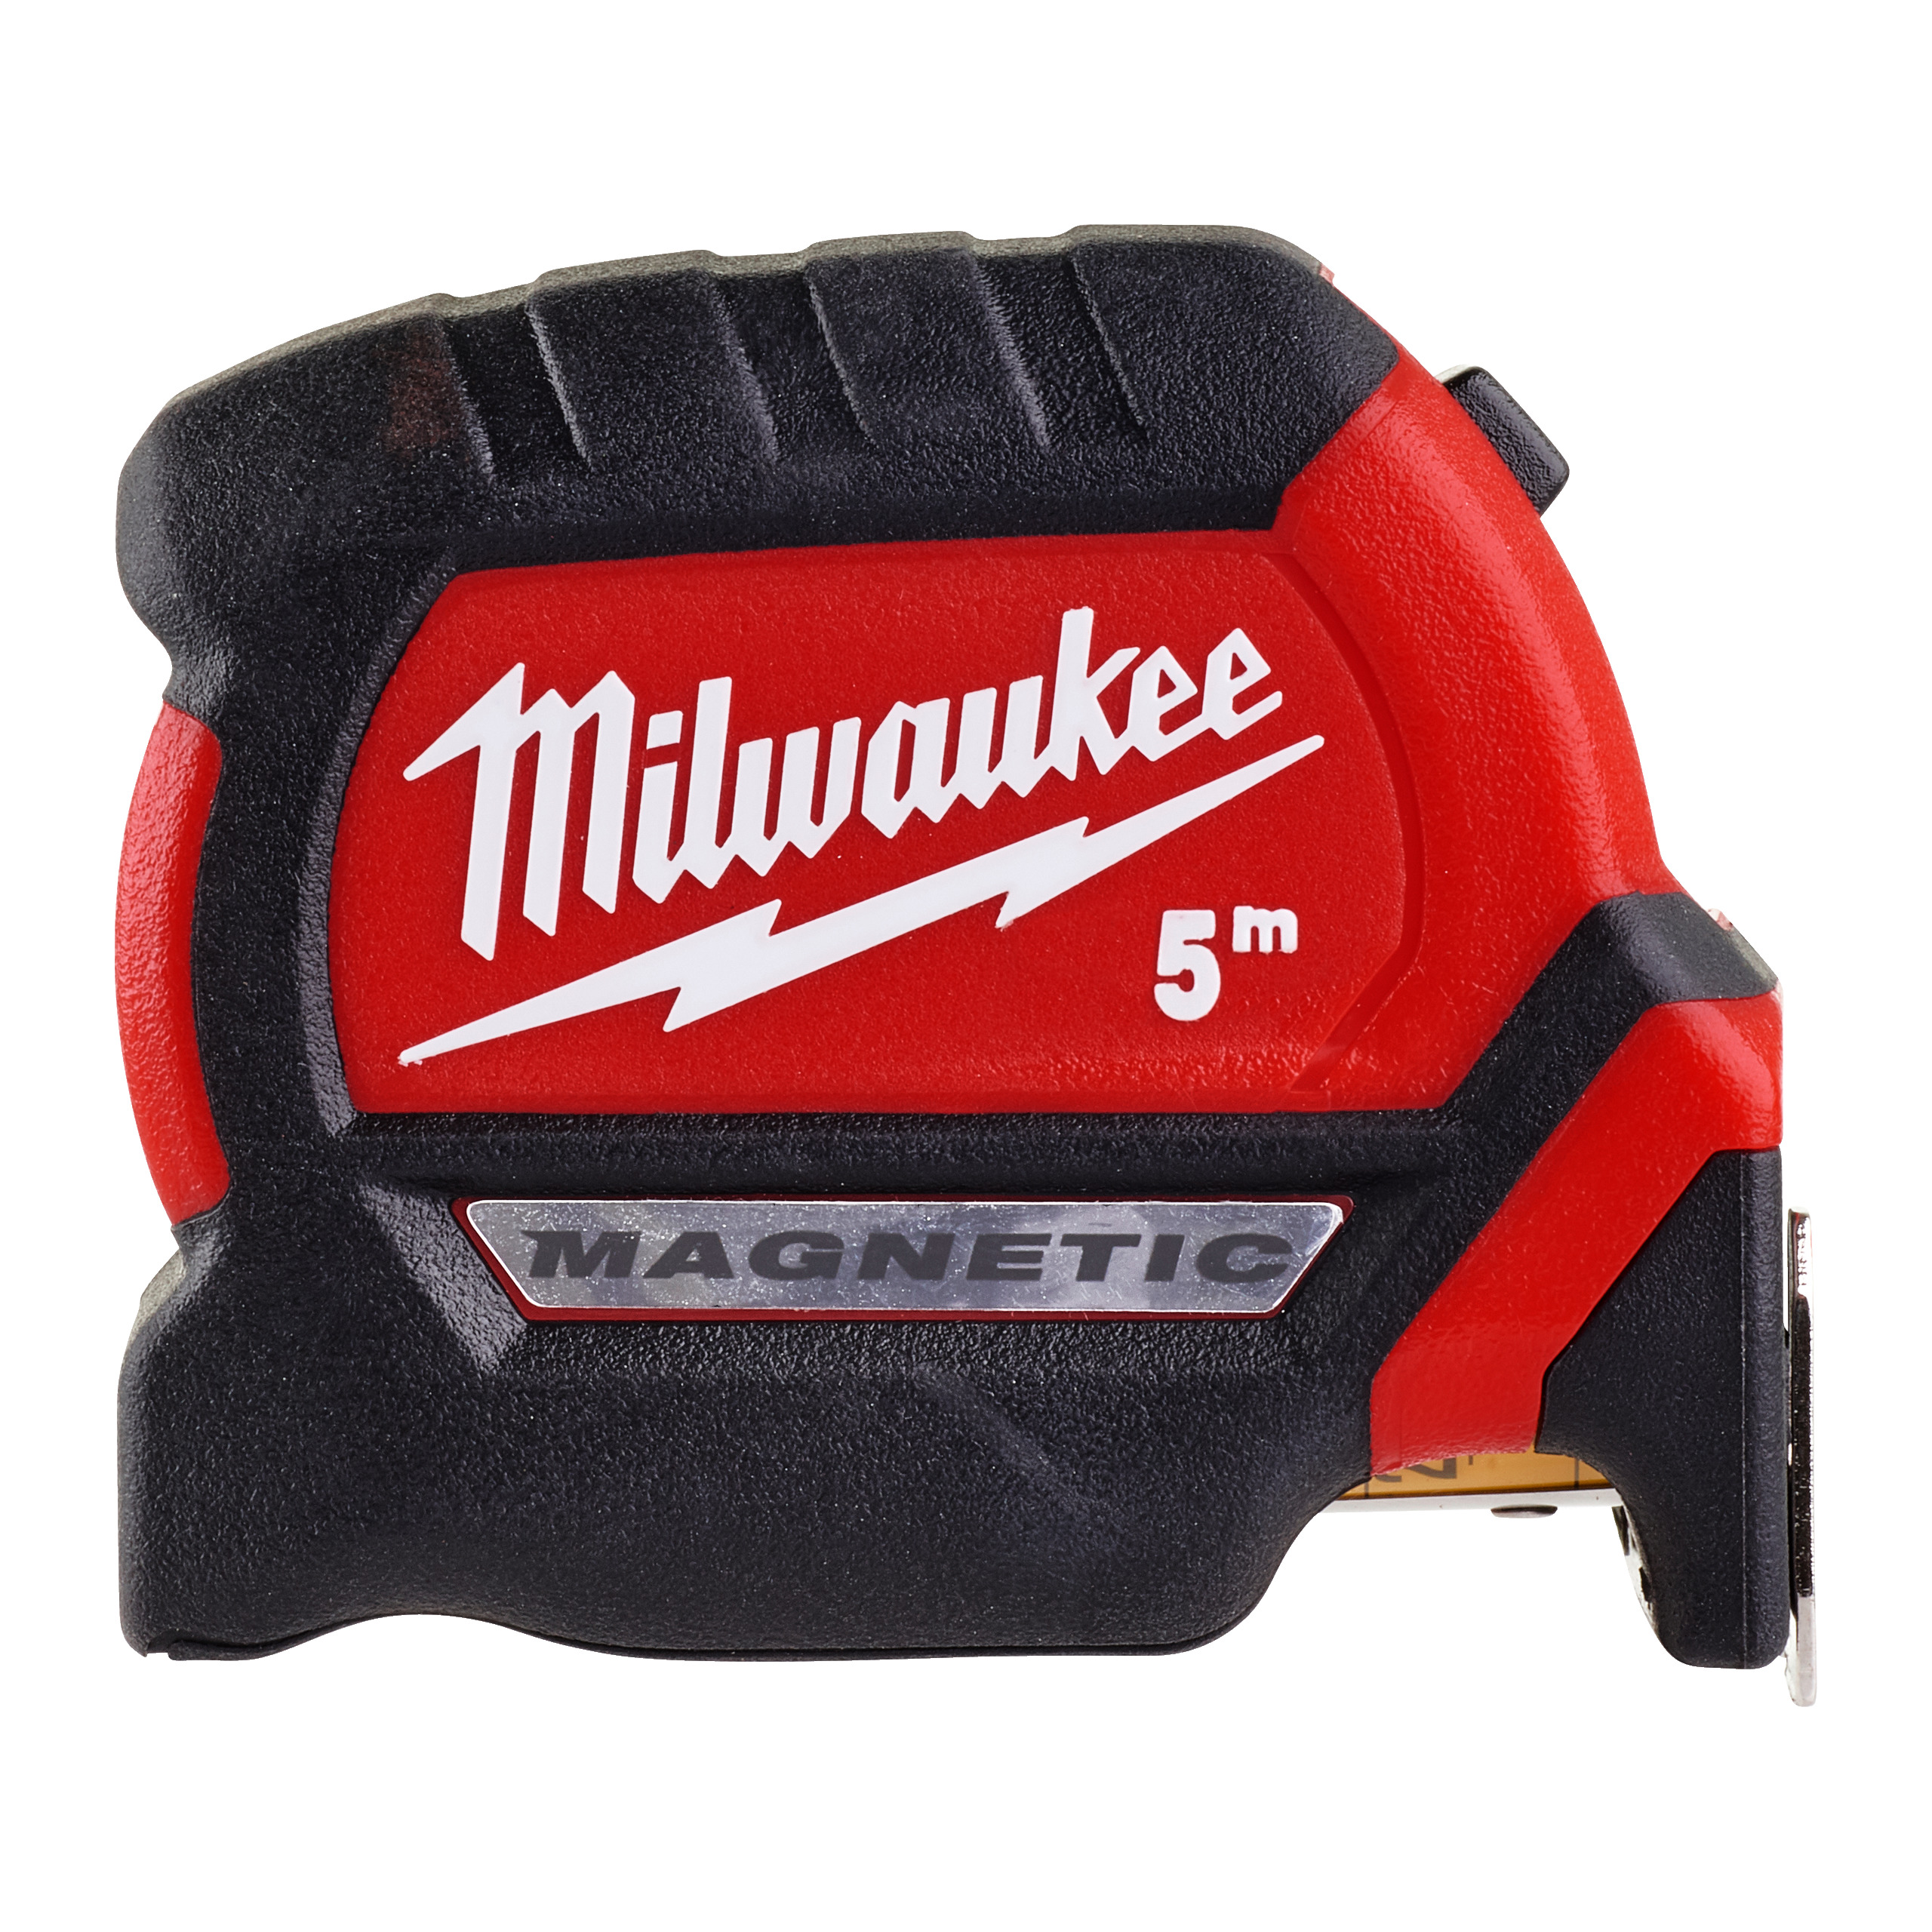 Milwaukee Magnetic Tape Measure 5 m / 27 - 1pc 4932464599